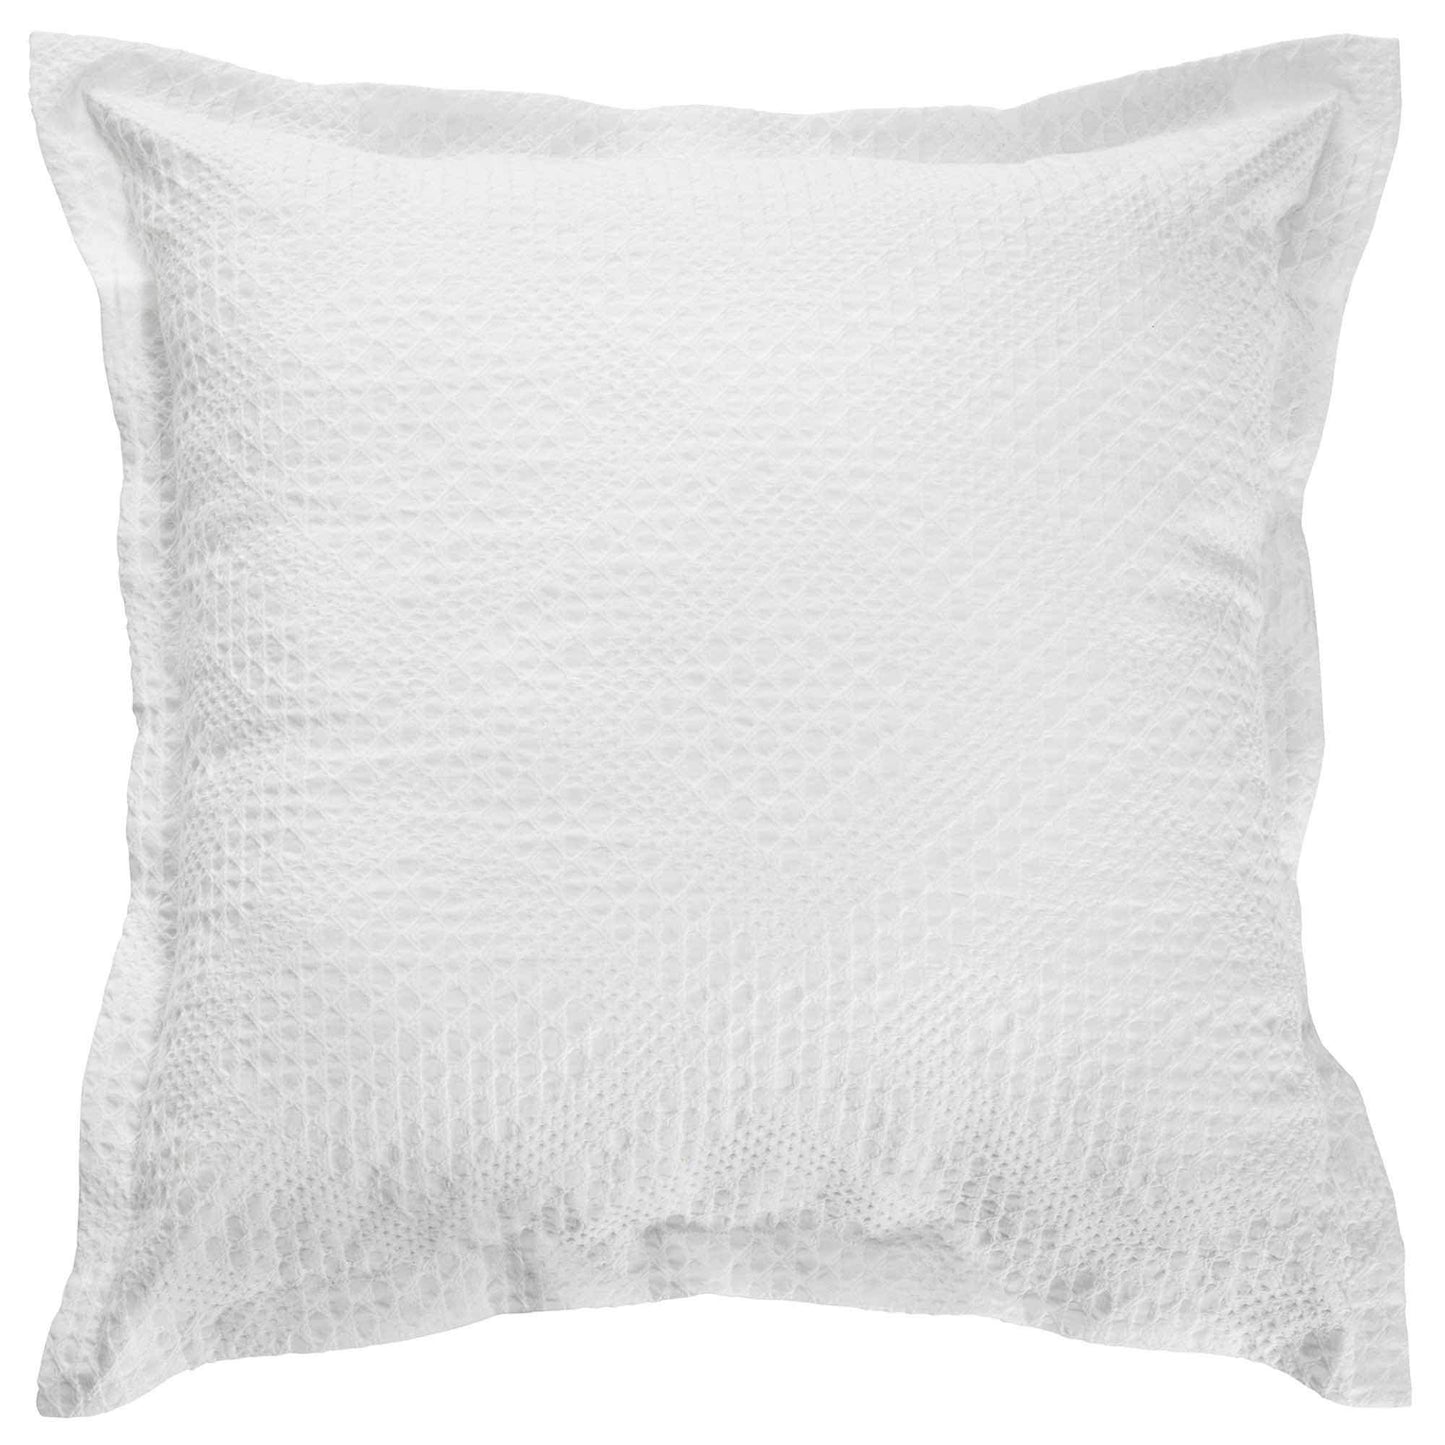 Colca European Pillowcase White by Bianca